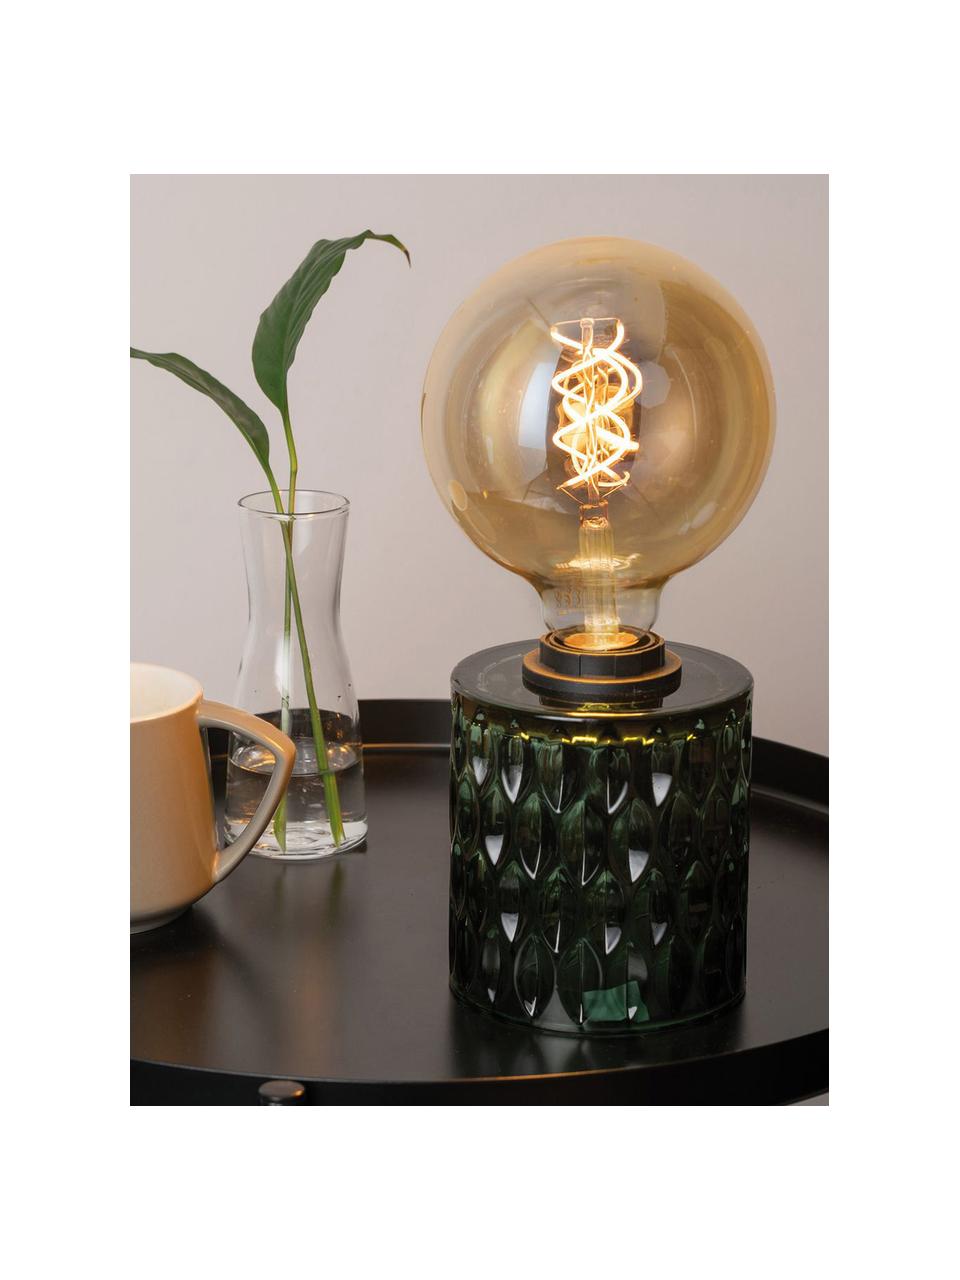 Lampada da tavolo piccola in vetro verde Crystal Magic, Verde, Ø 11 x Alt. 13 cm